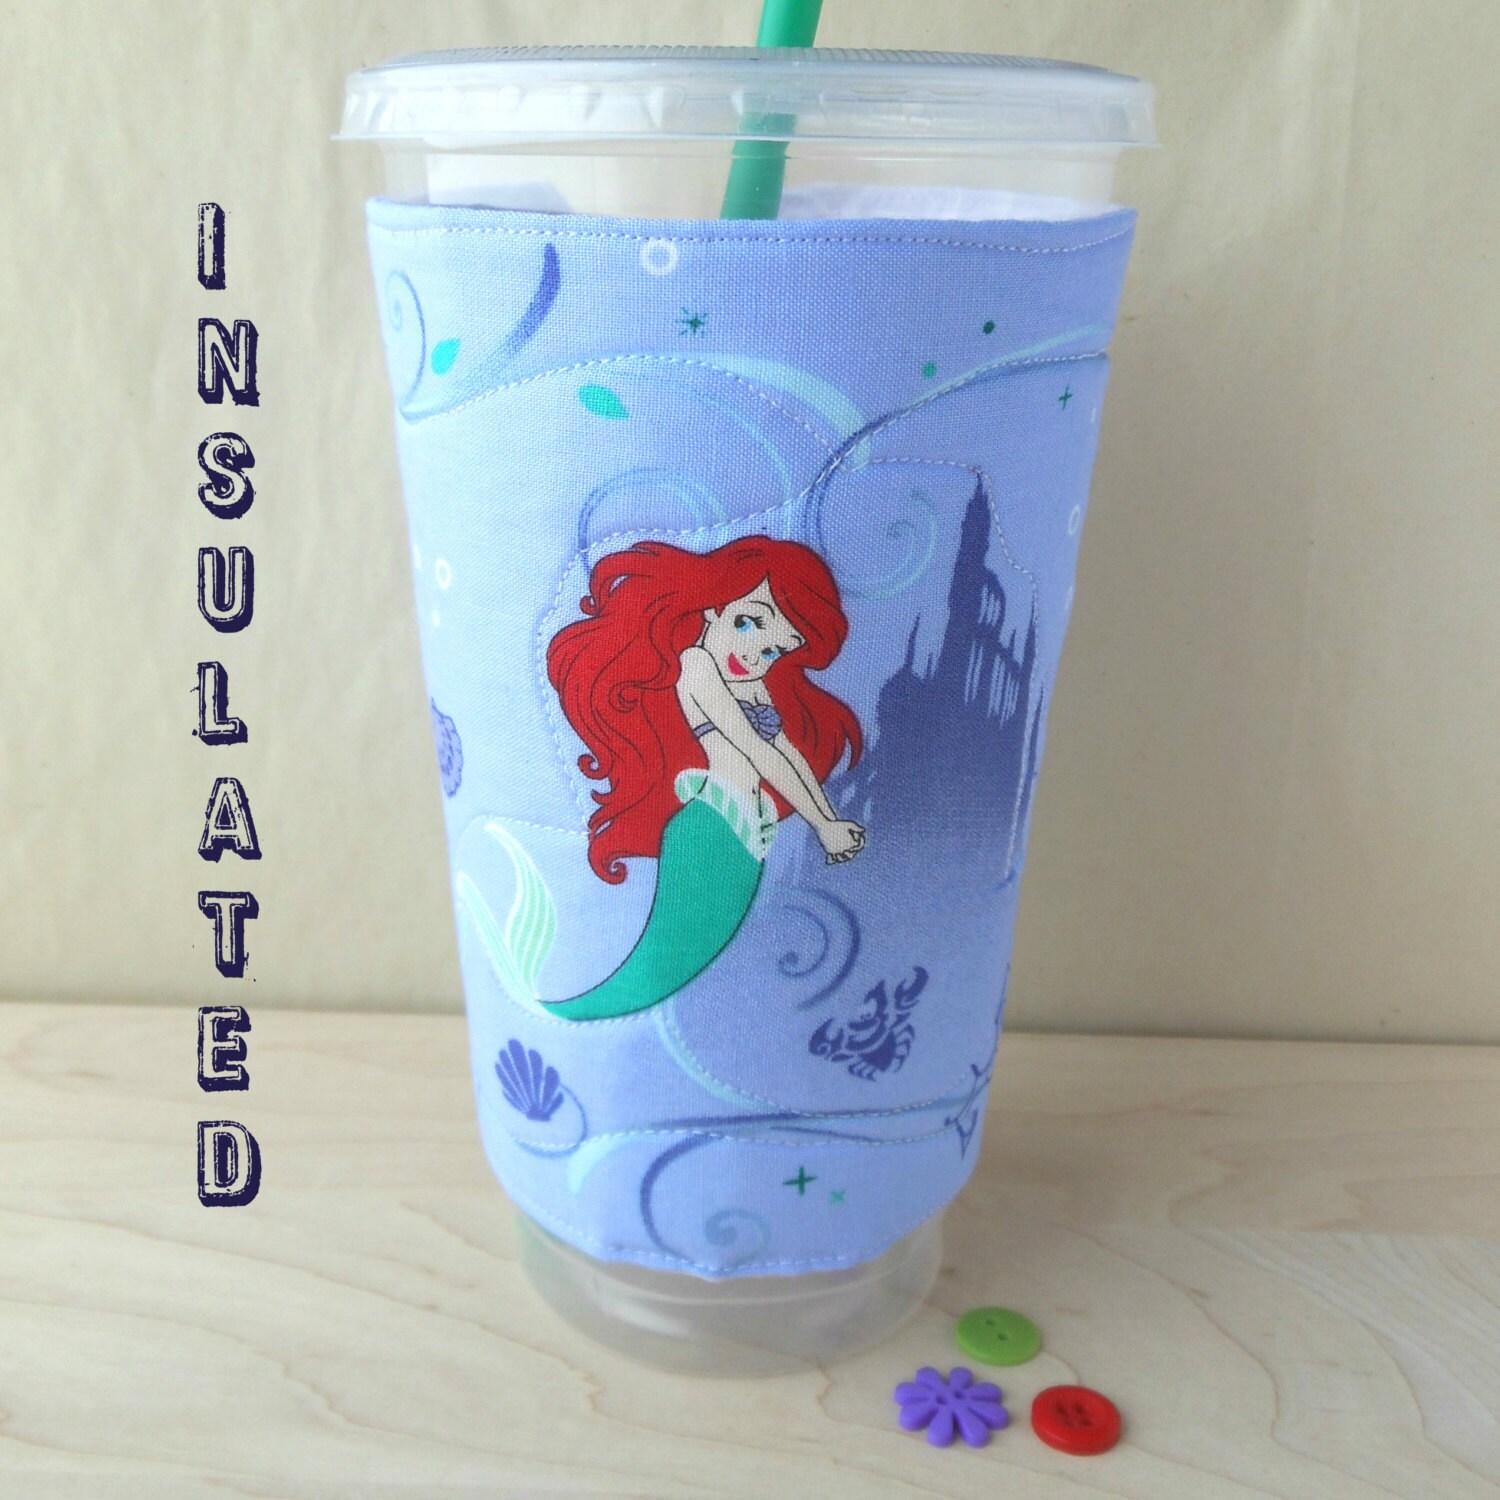 Ariel Disney Princess Little Mermaid cup cozy insulated